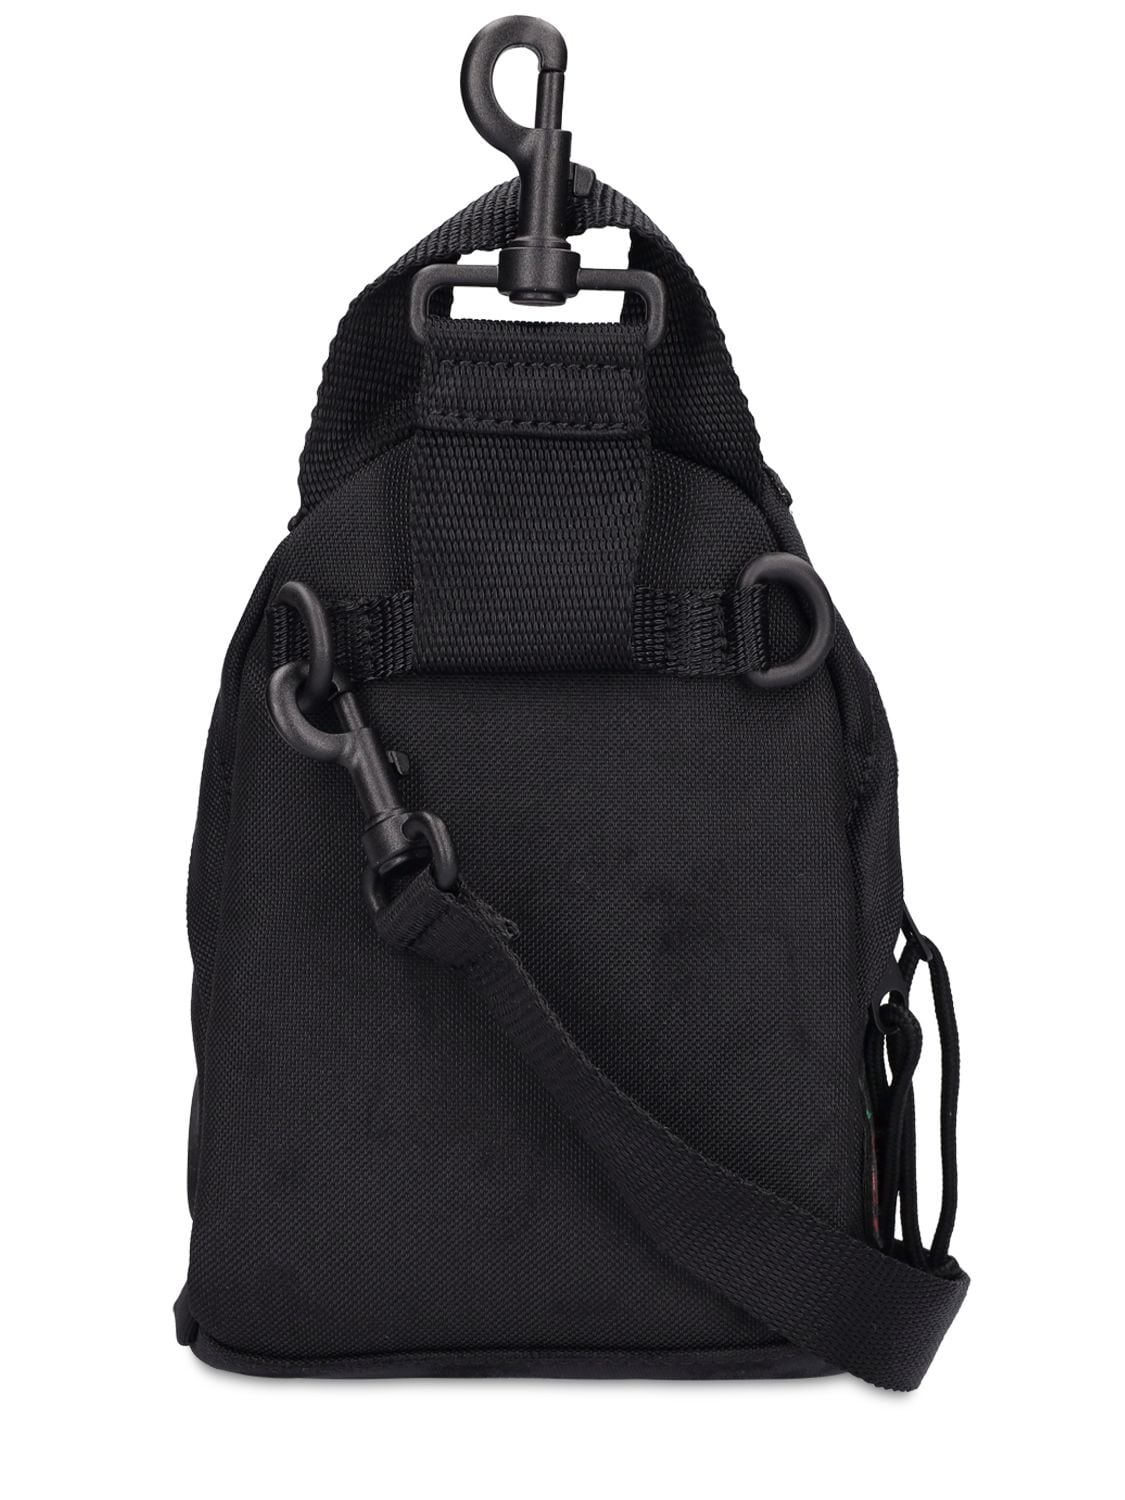 Balenciaga Lunch Box Black Small Shoulder Bag 638207 – ZAK BAGS